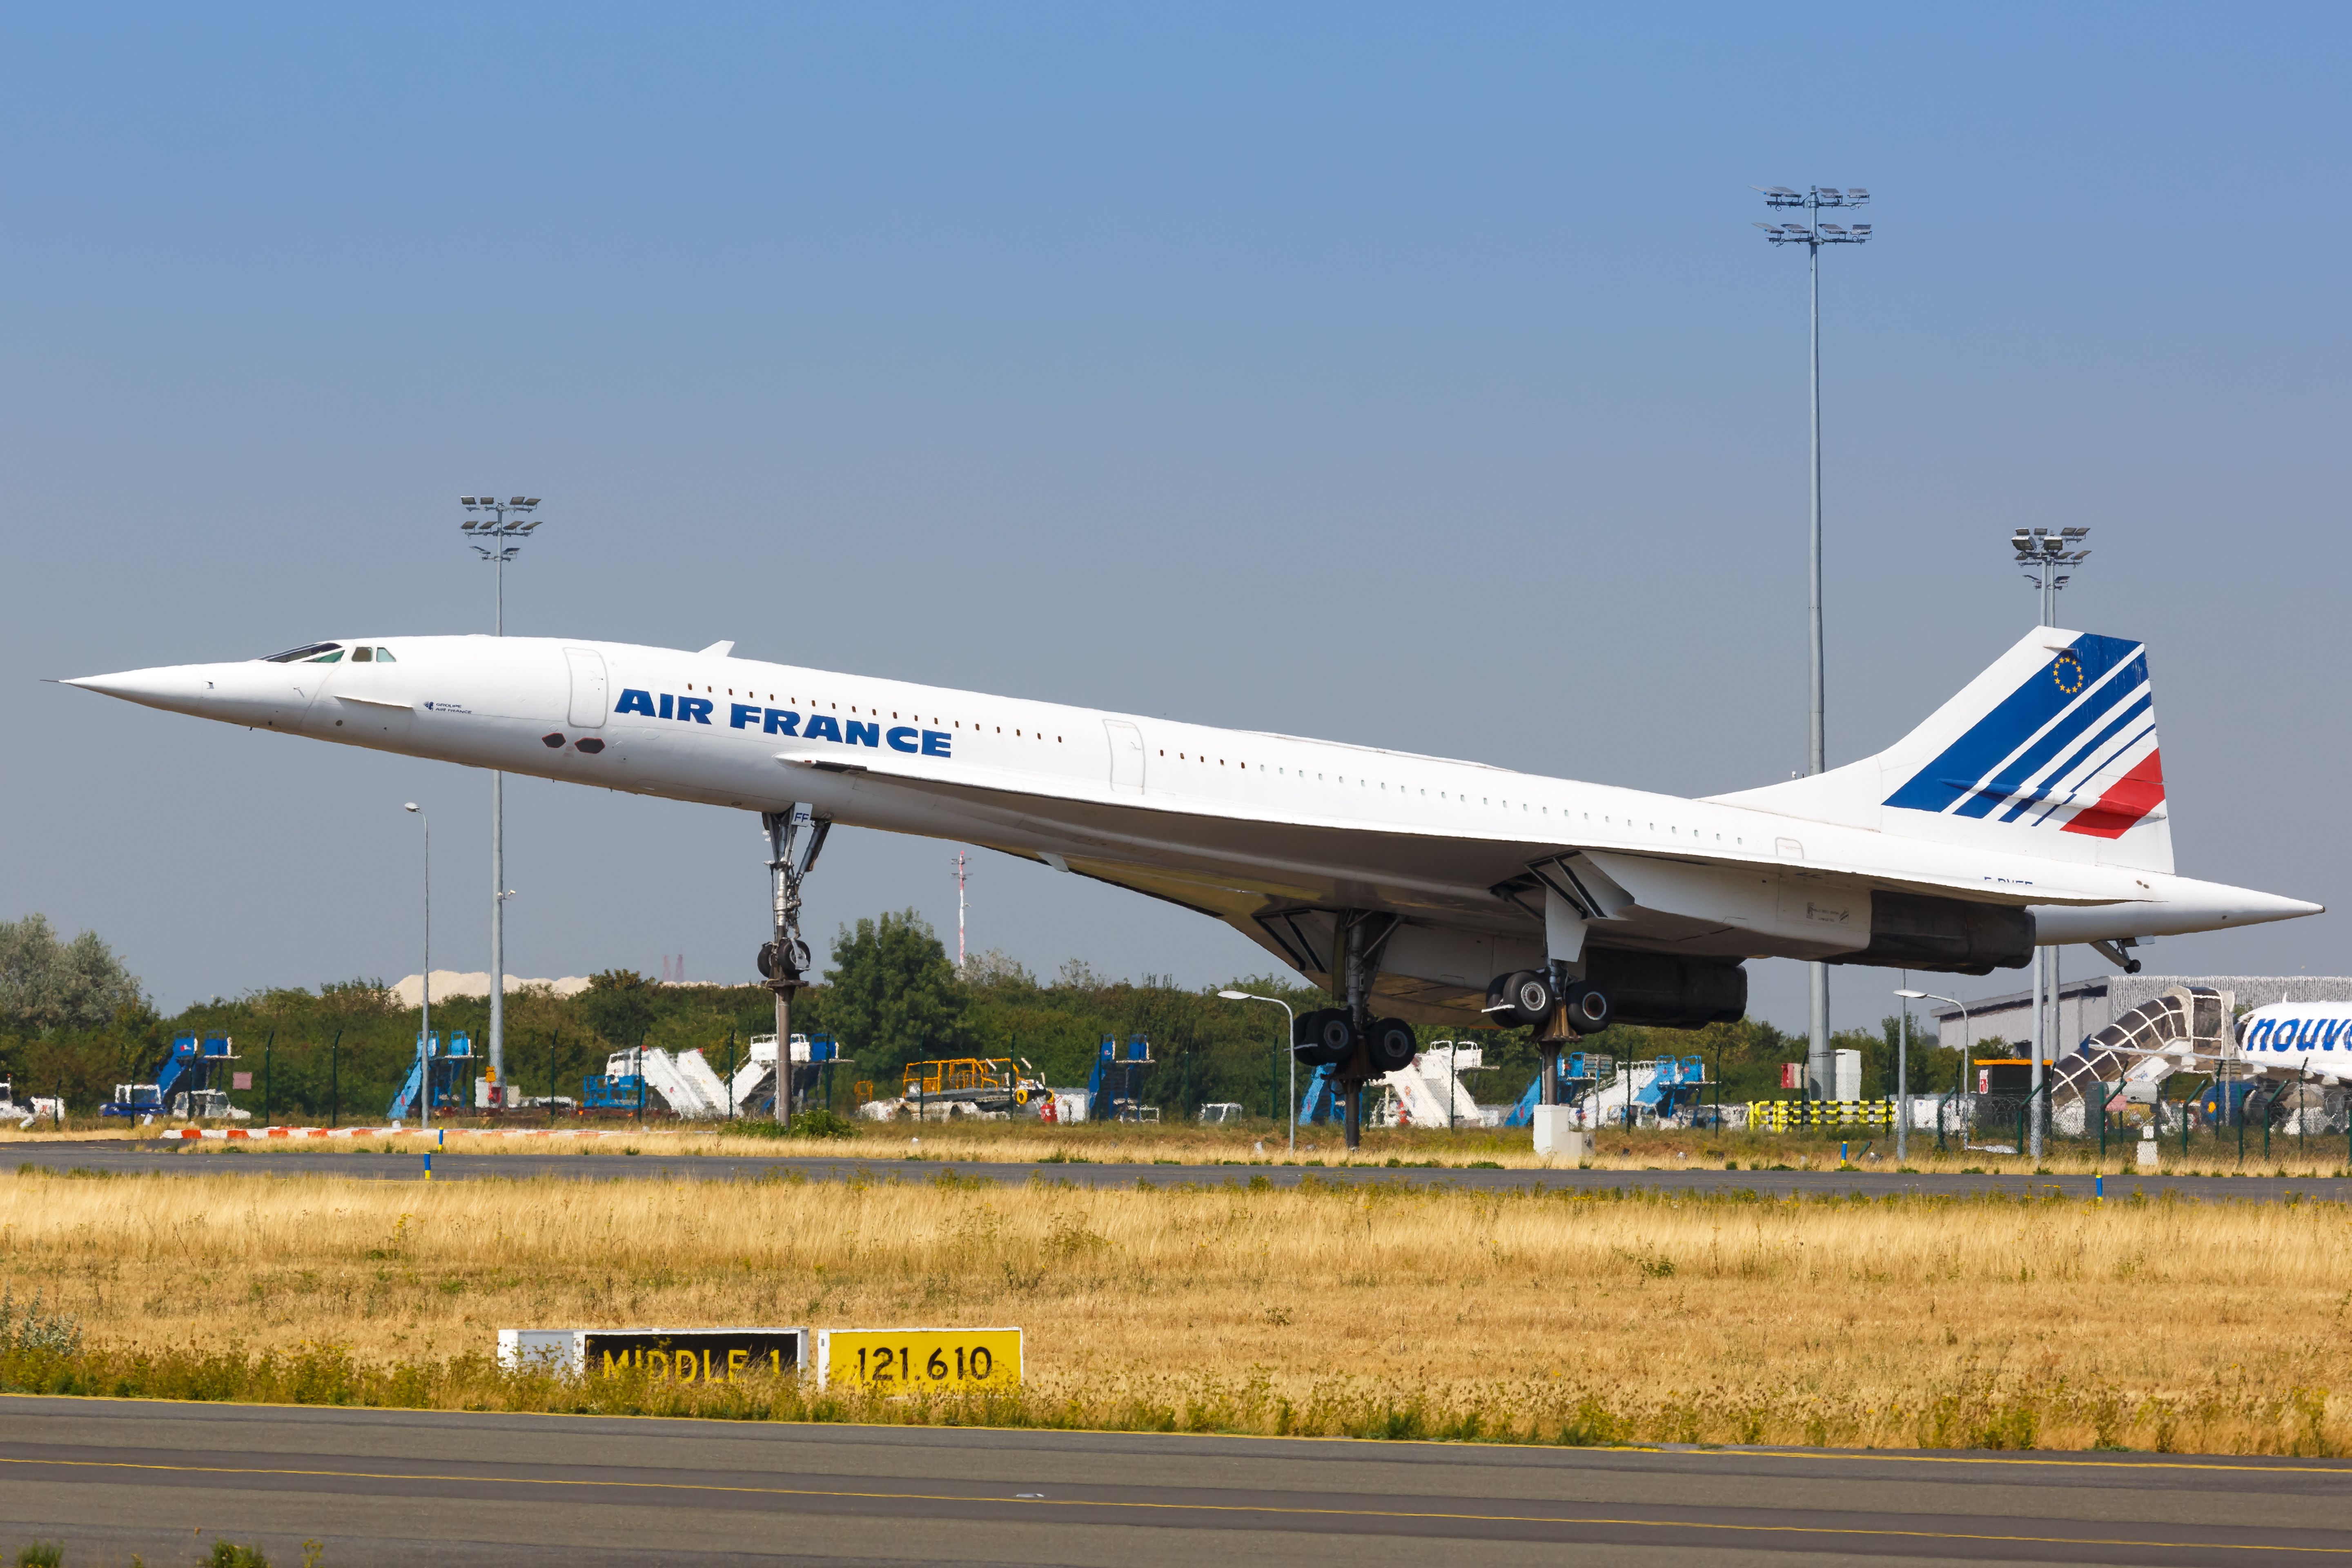 An Air France Concorde at Paris Charles de Gaulle airport.